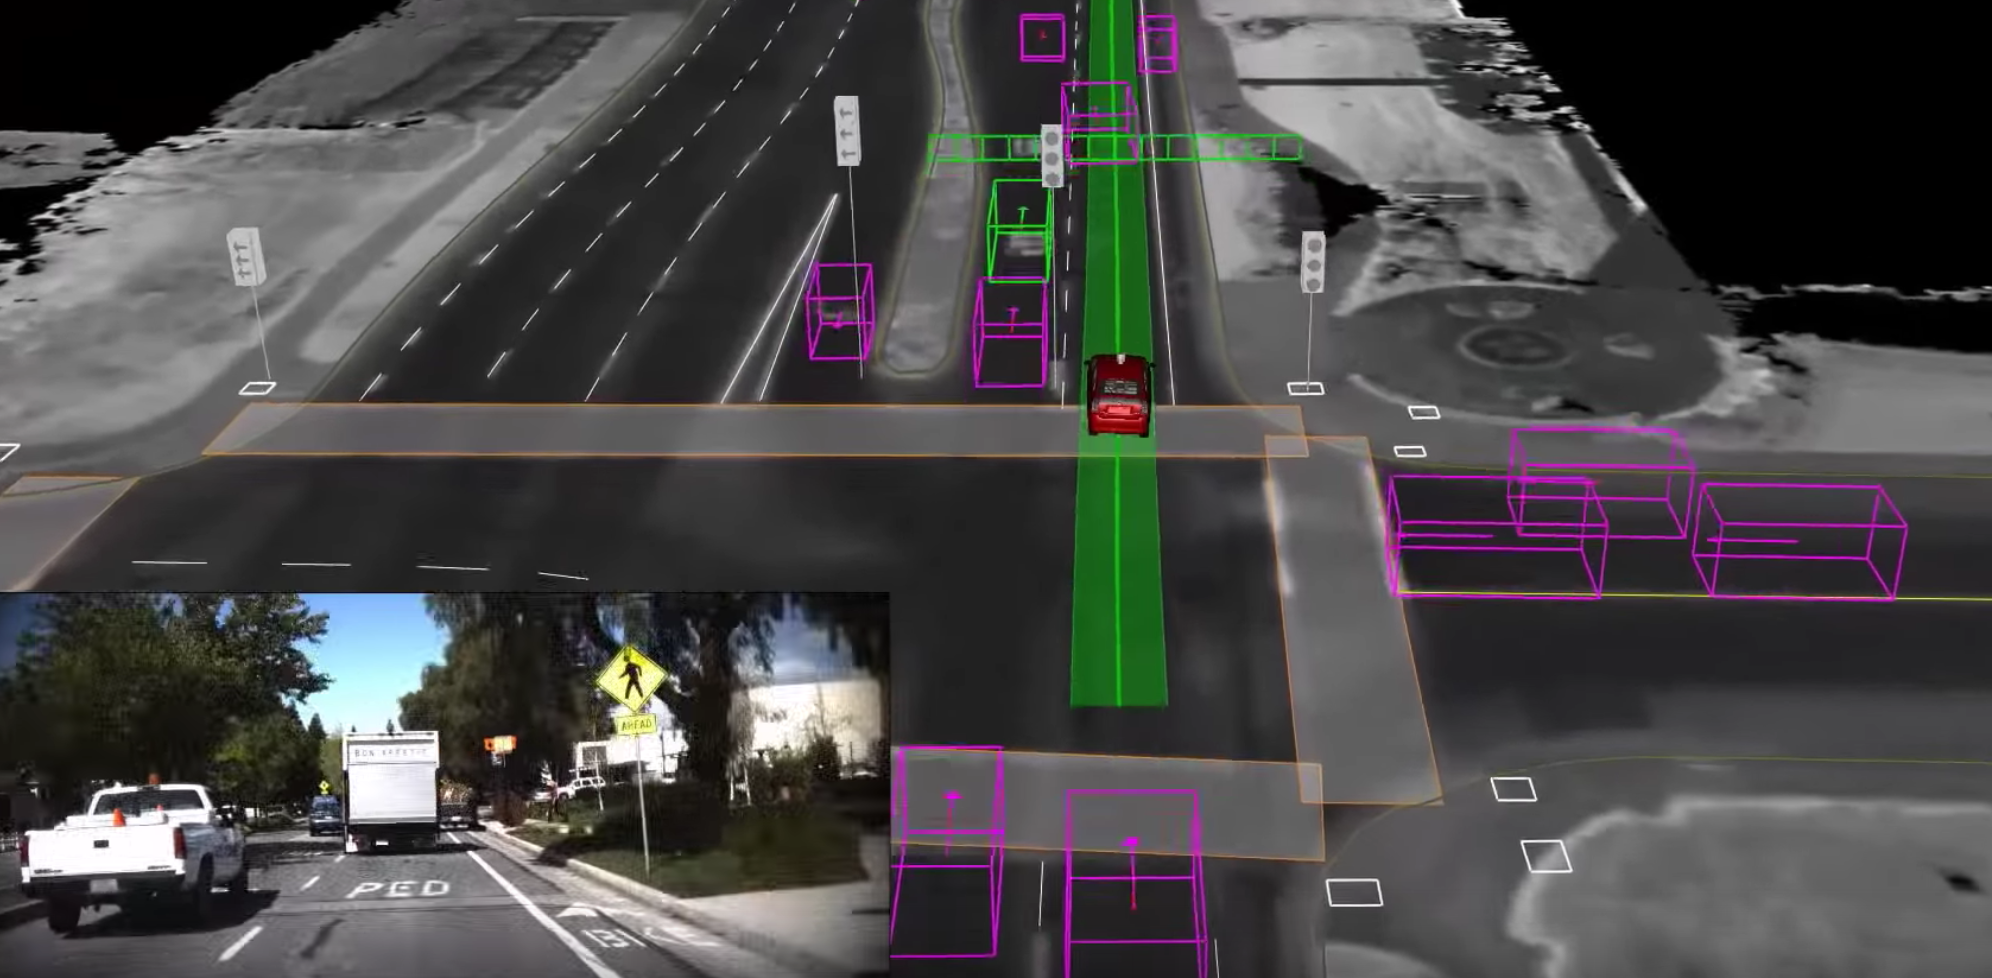 Google Self-Driving Cars Use Computer Vision